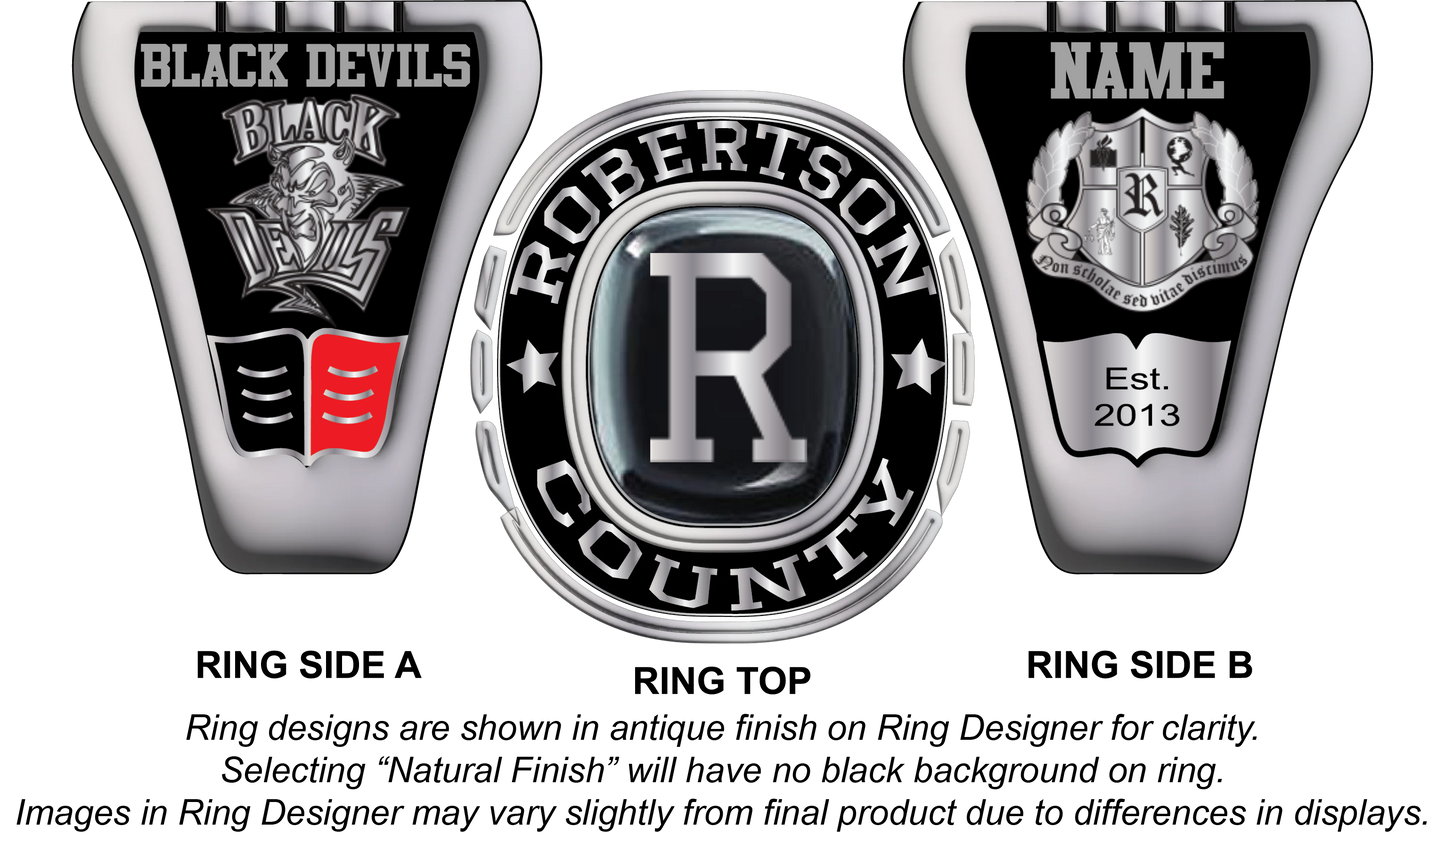 Regal - Robertson County School Class Ring